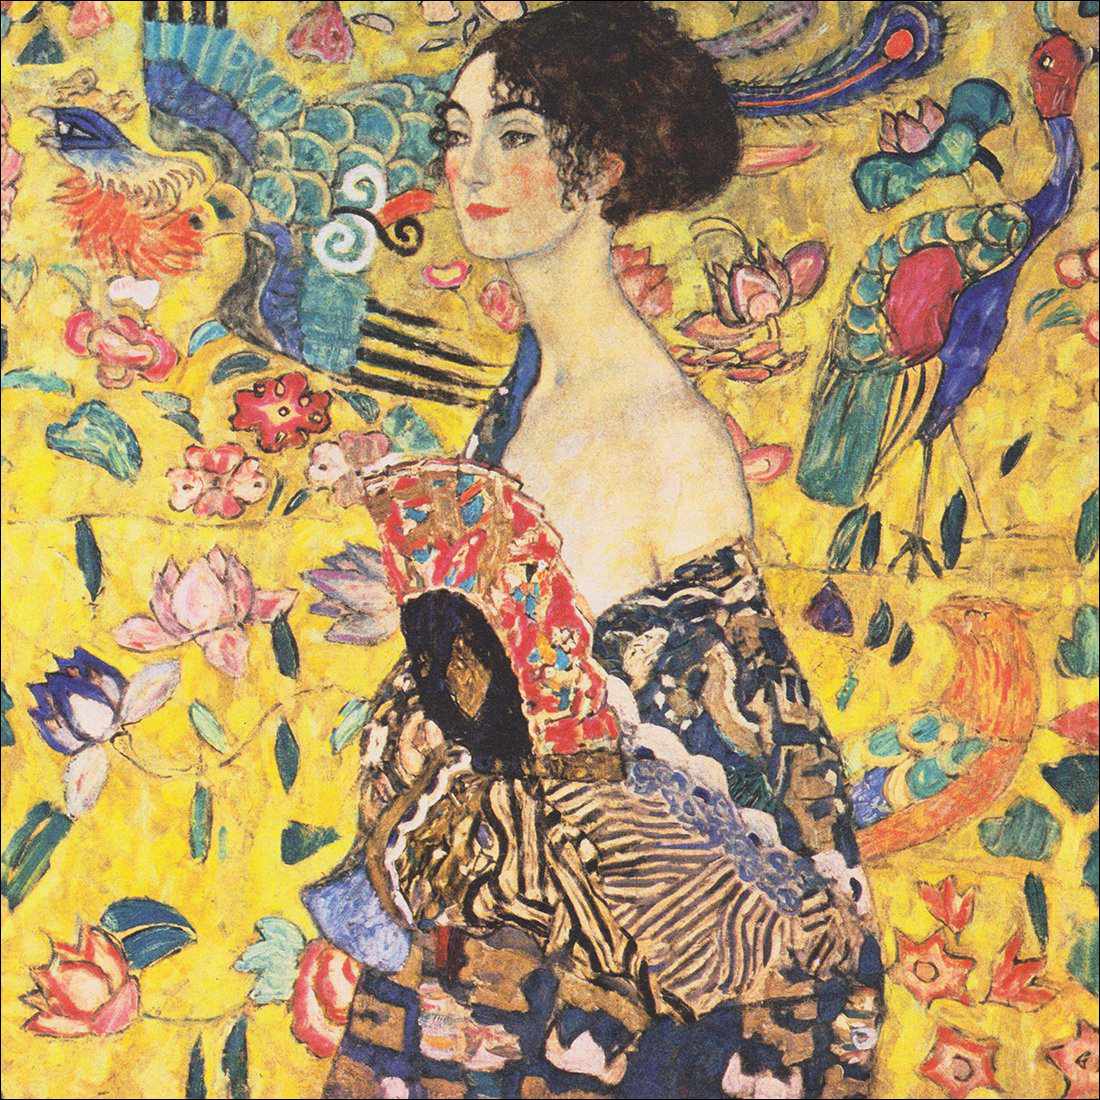 Lady With Fan - Gustav Klimt, Square-Acrylic-Wall Art Design-With Border-Acrylic - No Frame-37x37cm-Wall Art Designs